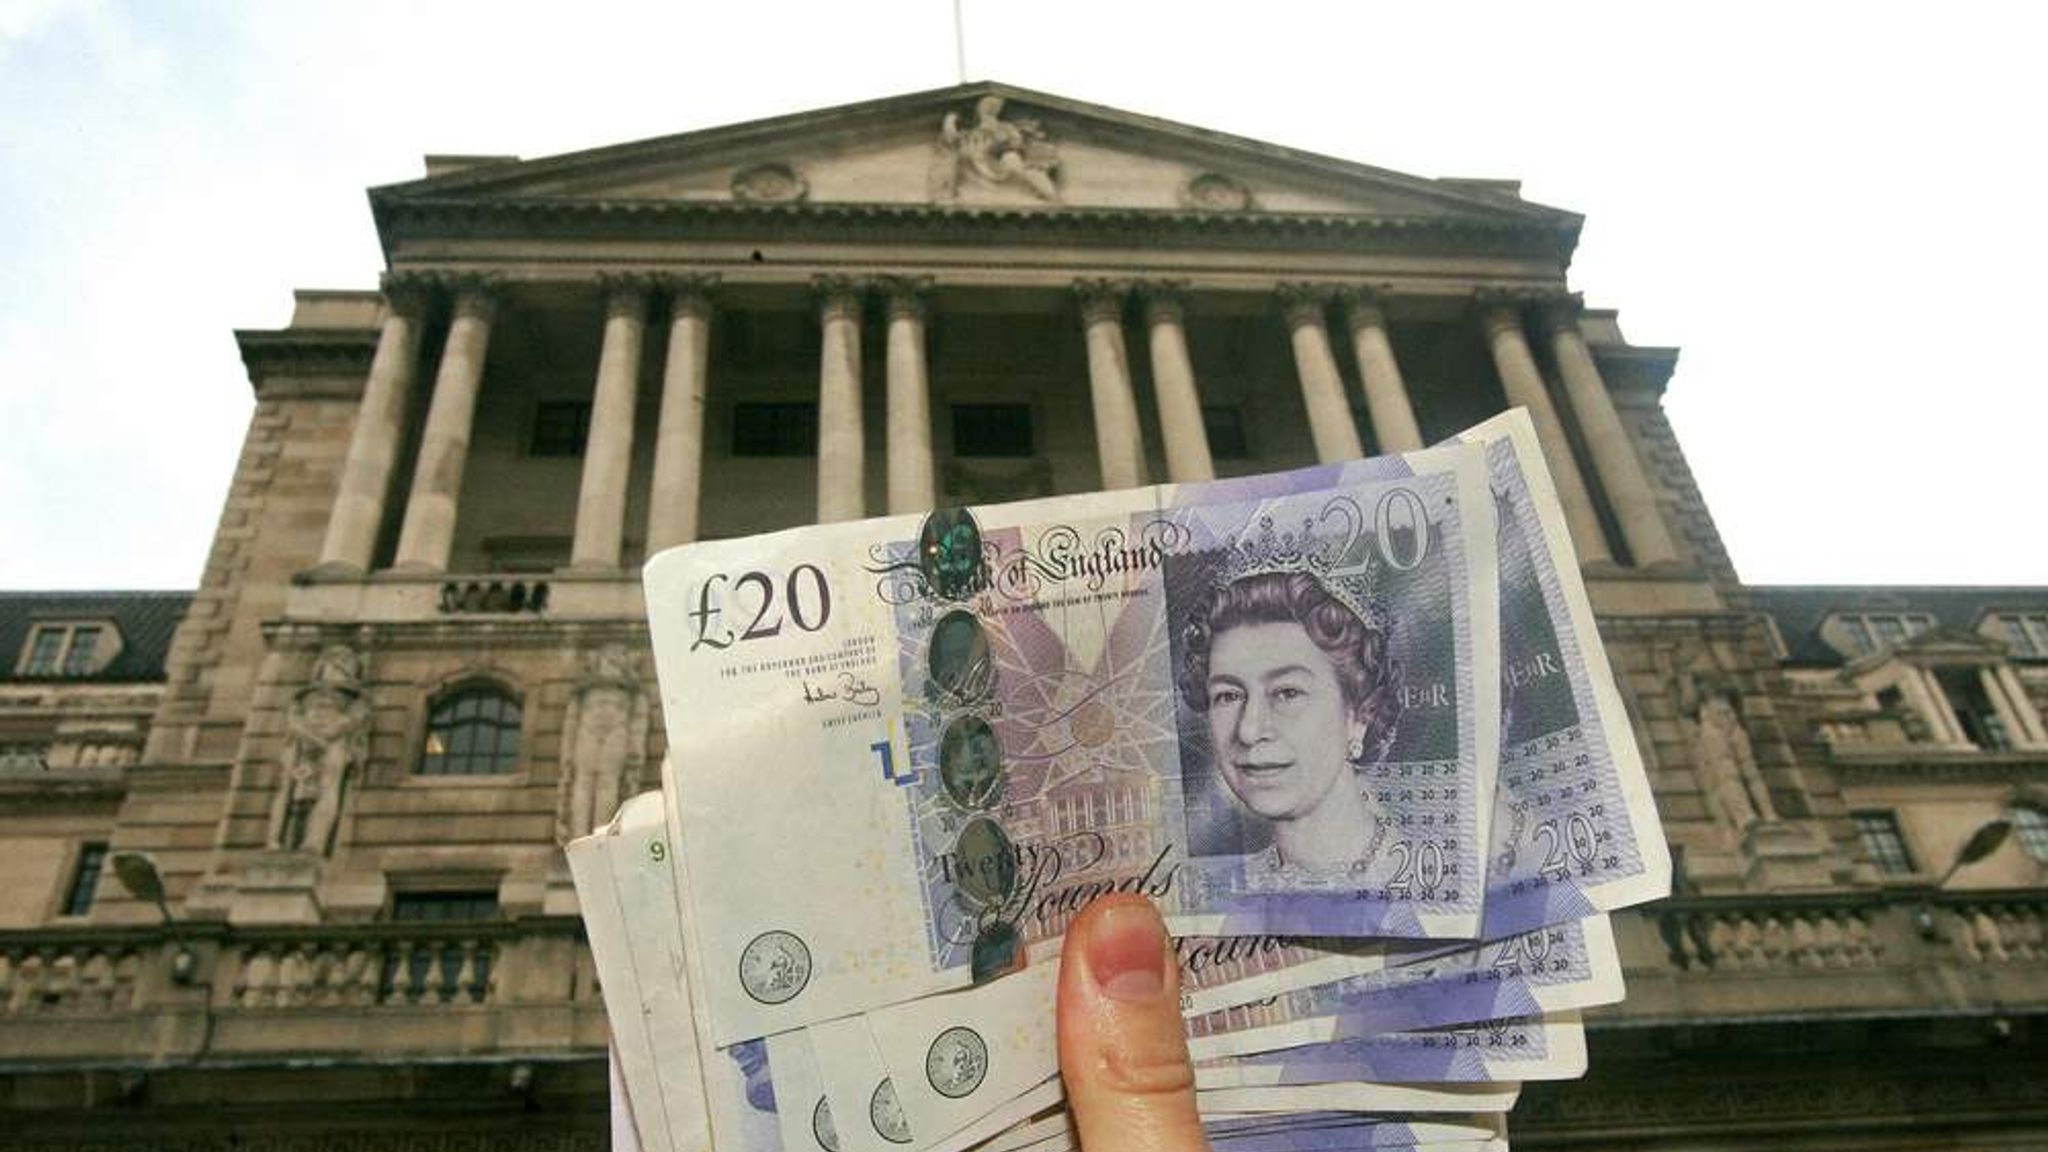 British Bank И Акция Деньги За Знакомство